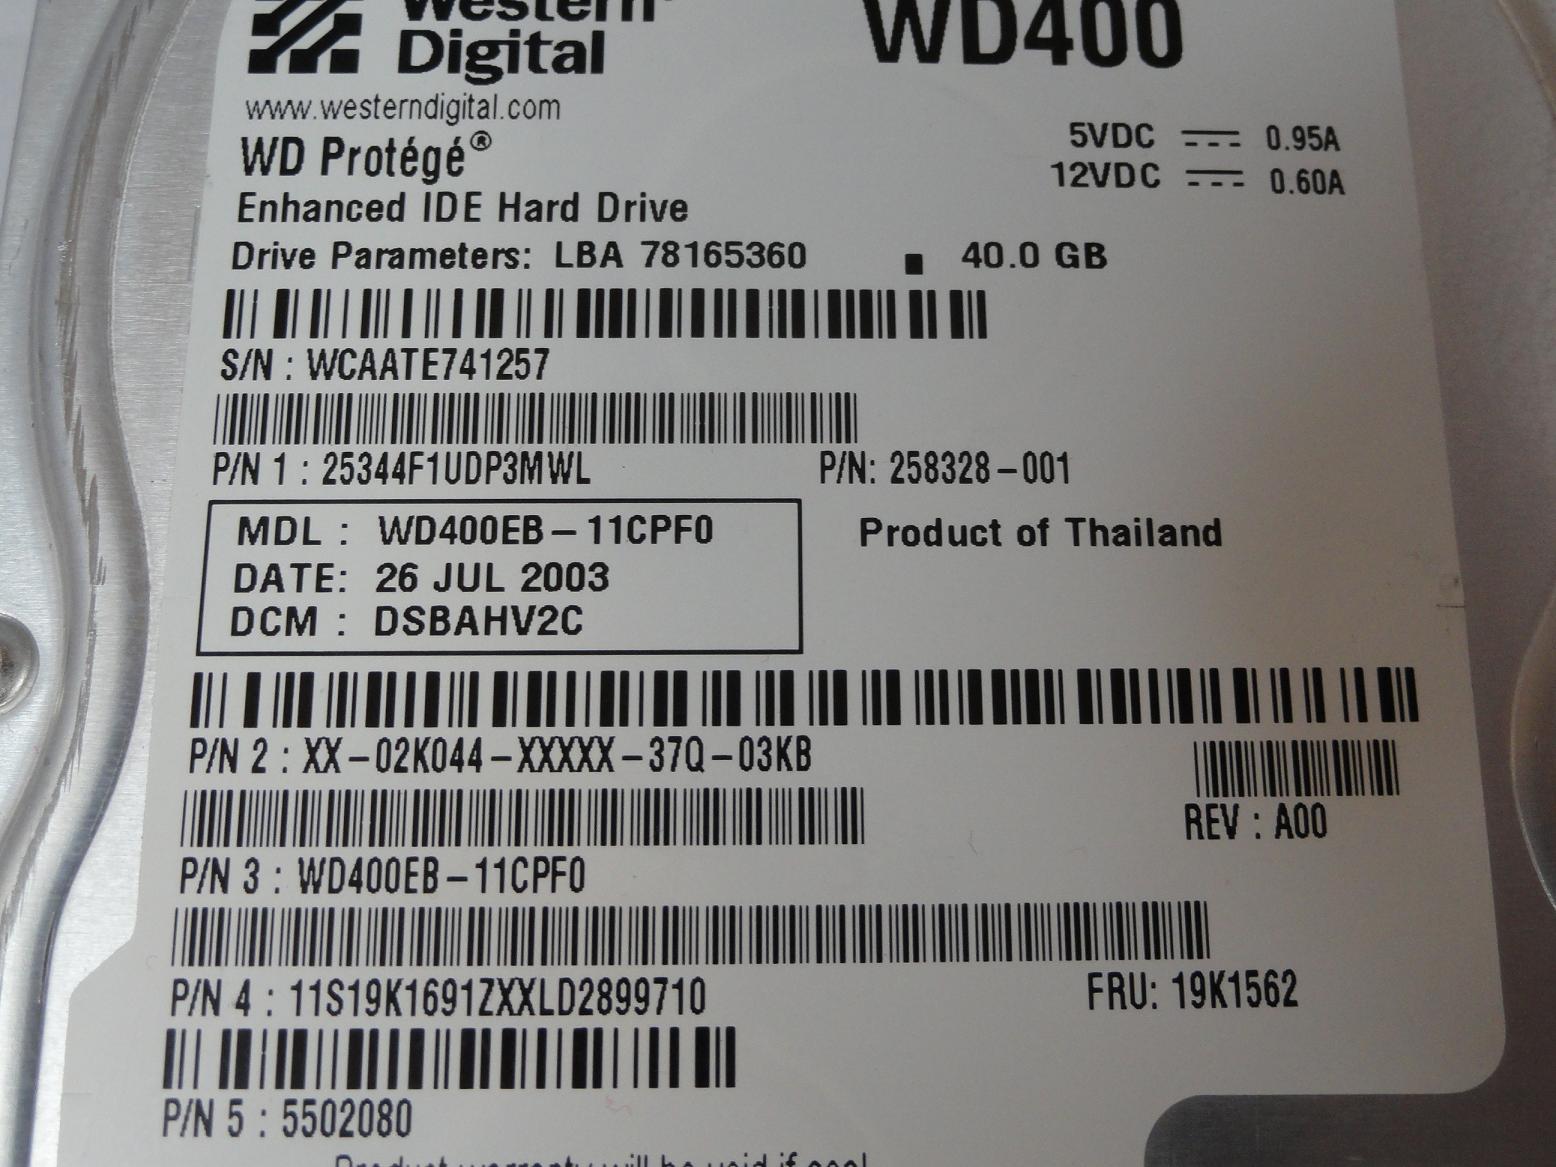 PR23376_WD400_WD Dell IBM HP 40GB IDE 7200rpm 3.5in HDD - Image3